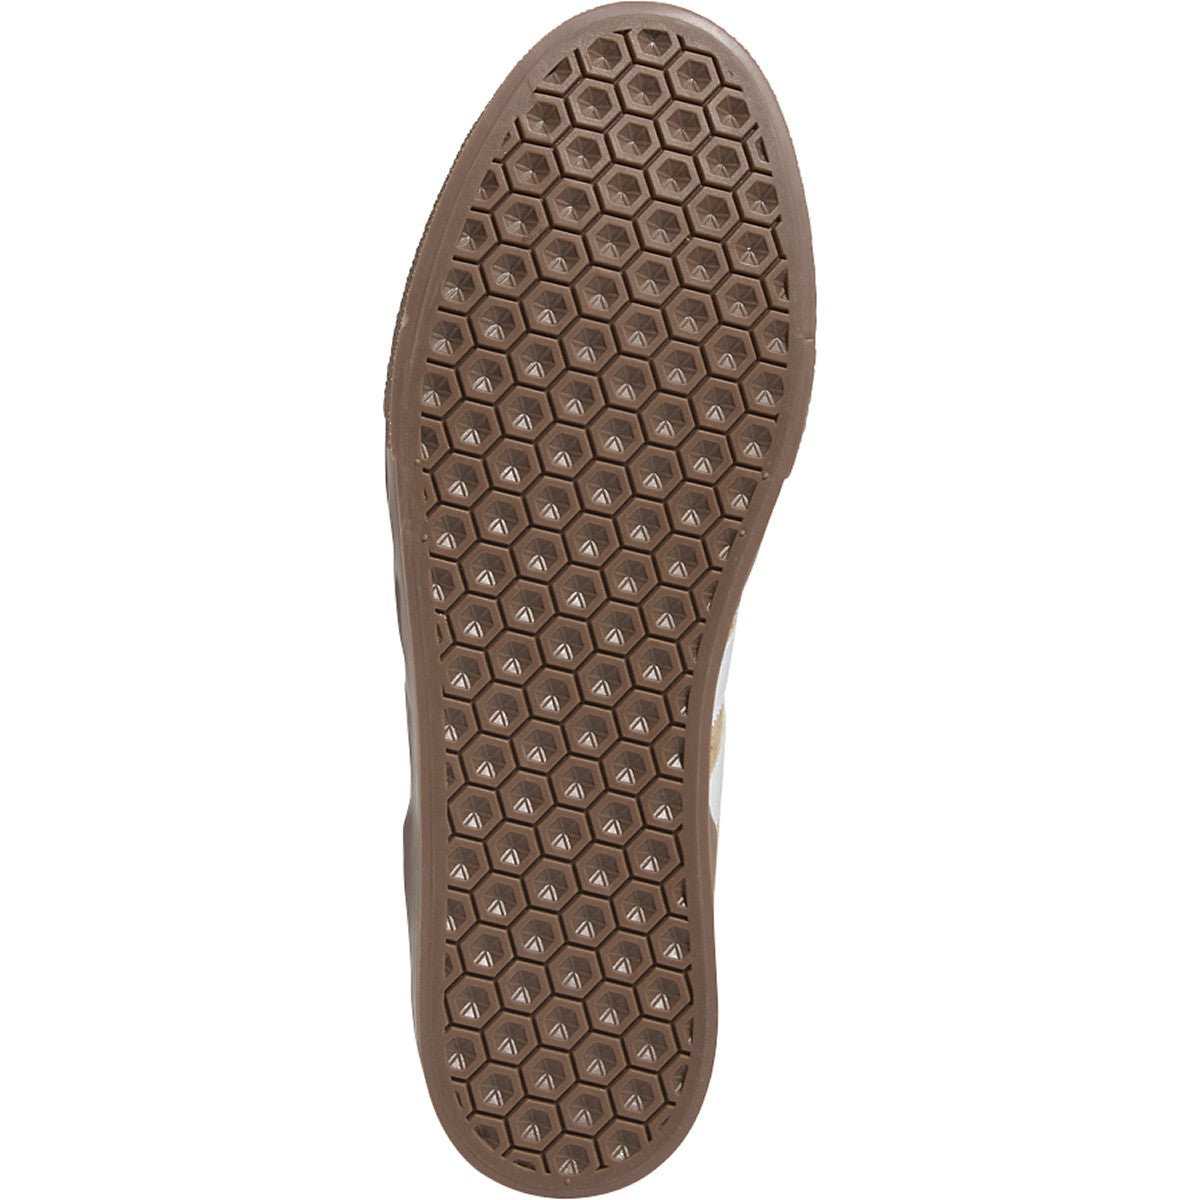 Cardboard Busenitz Vulc II Adidas Skate Shoe Bottom